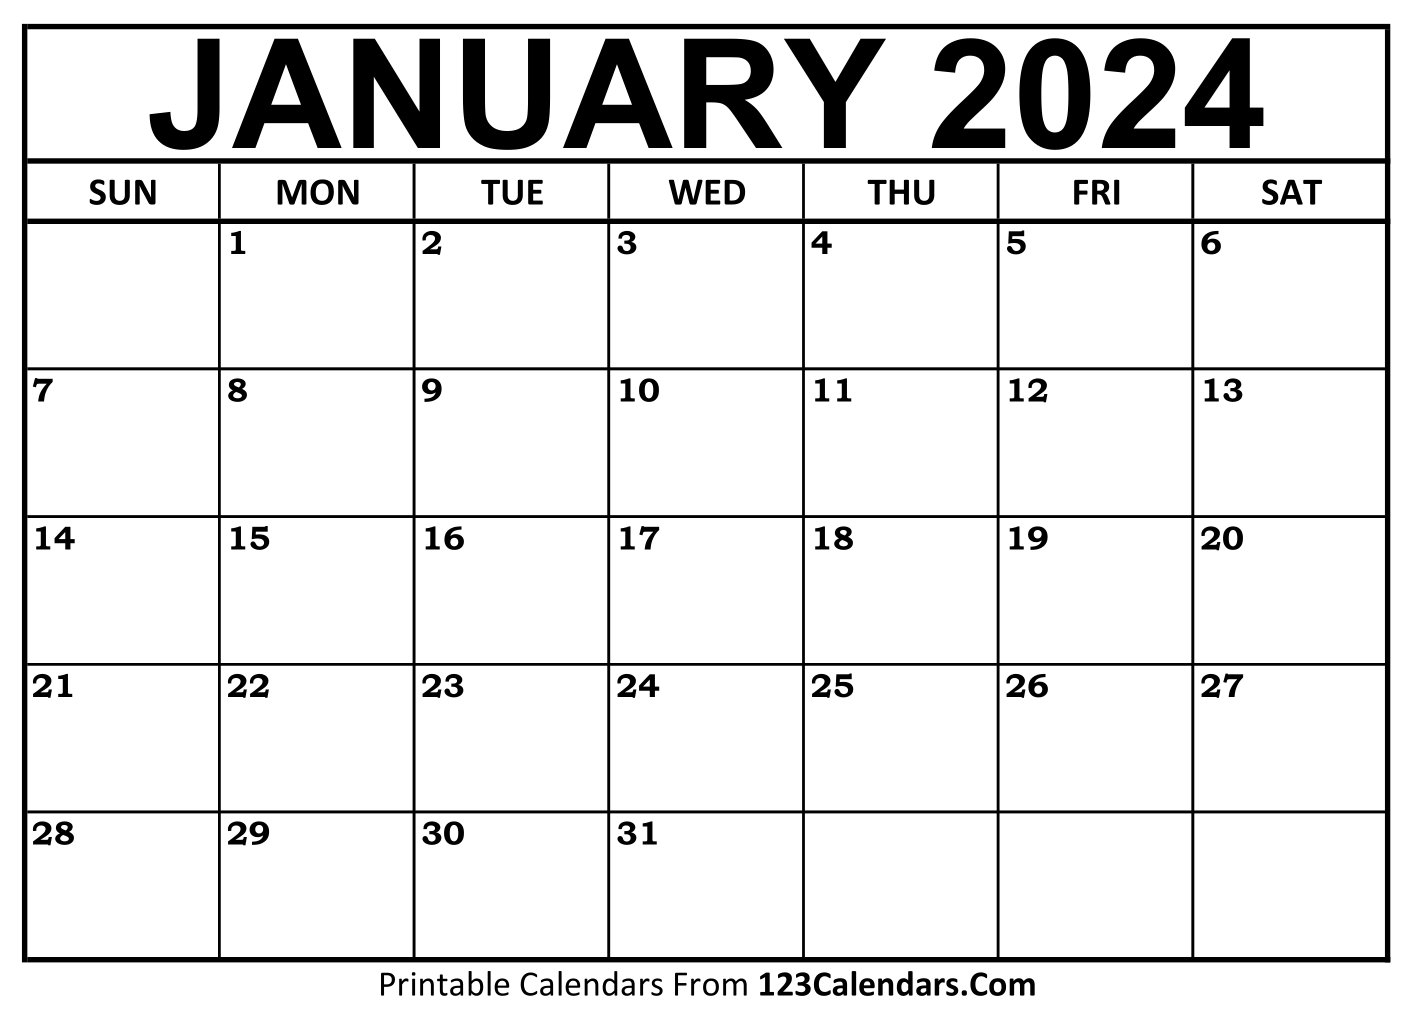 Printable January 2024 Calendar Templates - 123Calendars for Blank January 2024 Printable Calendar